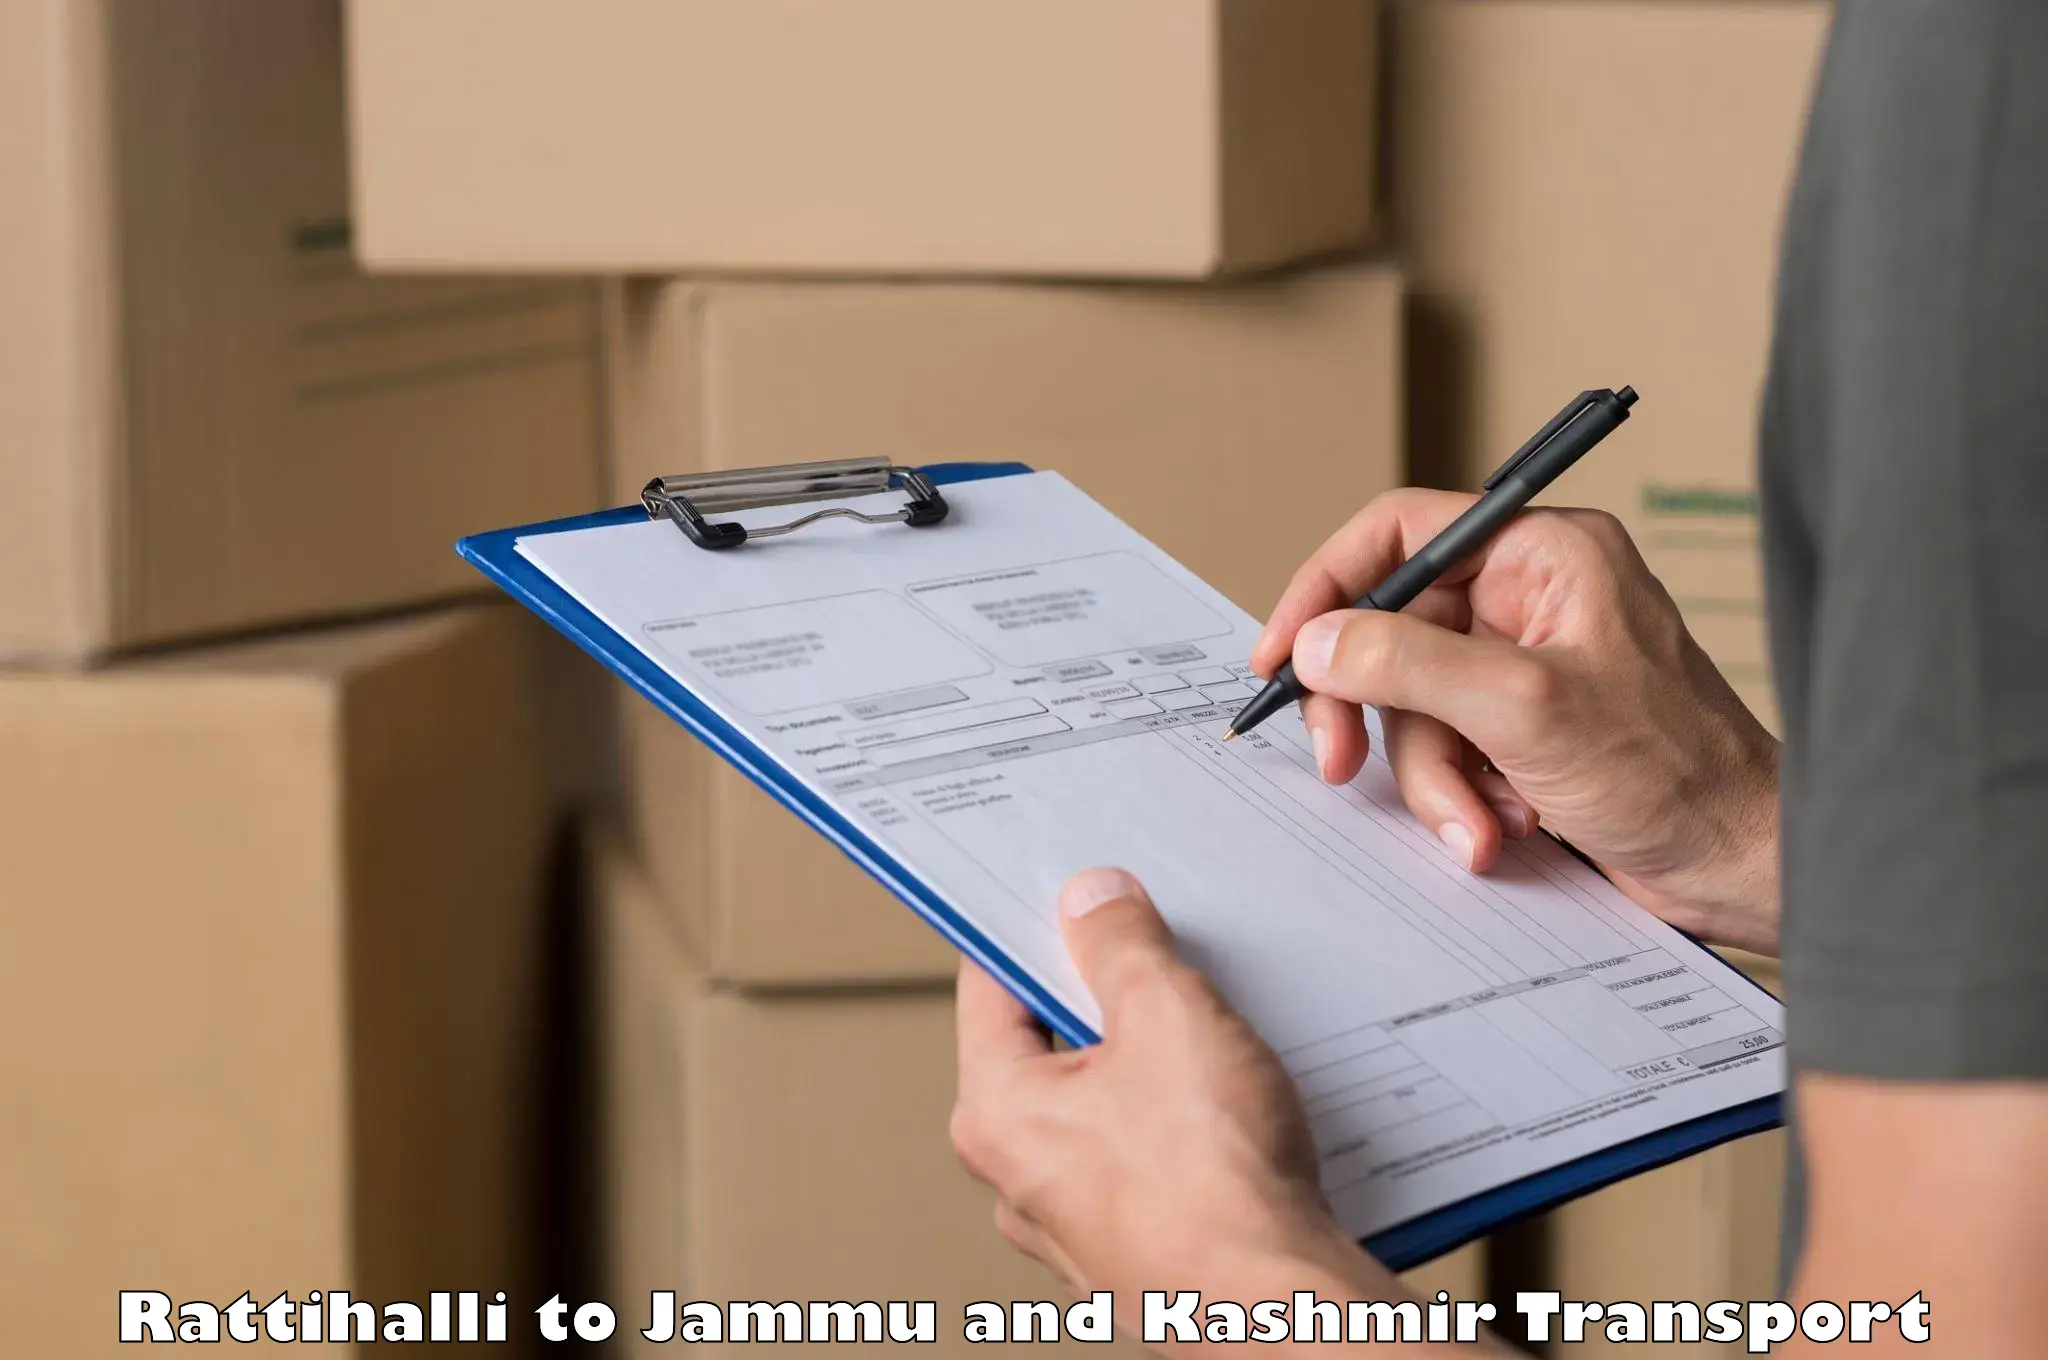 Online transport service Rattihalli to Jammu and Kashmir